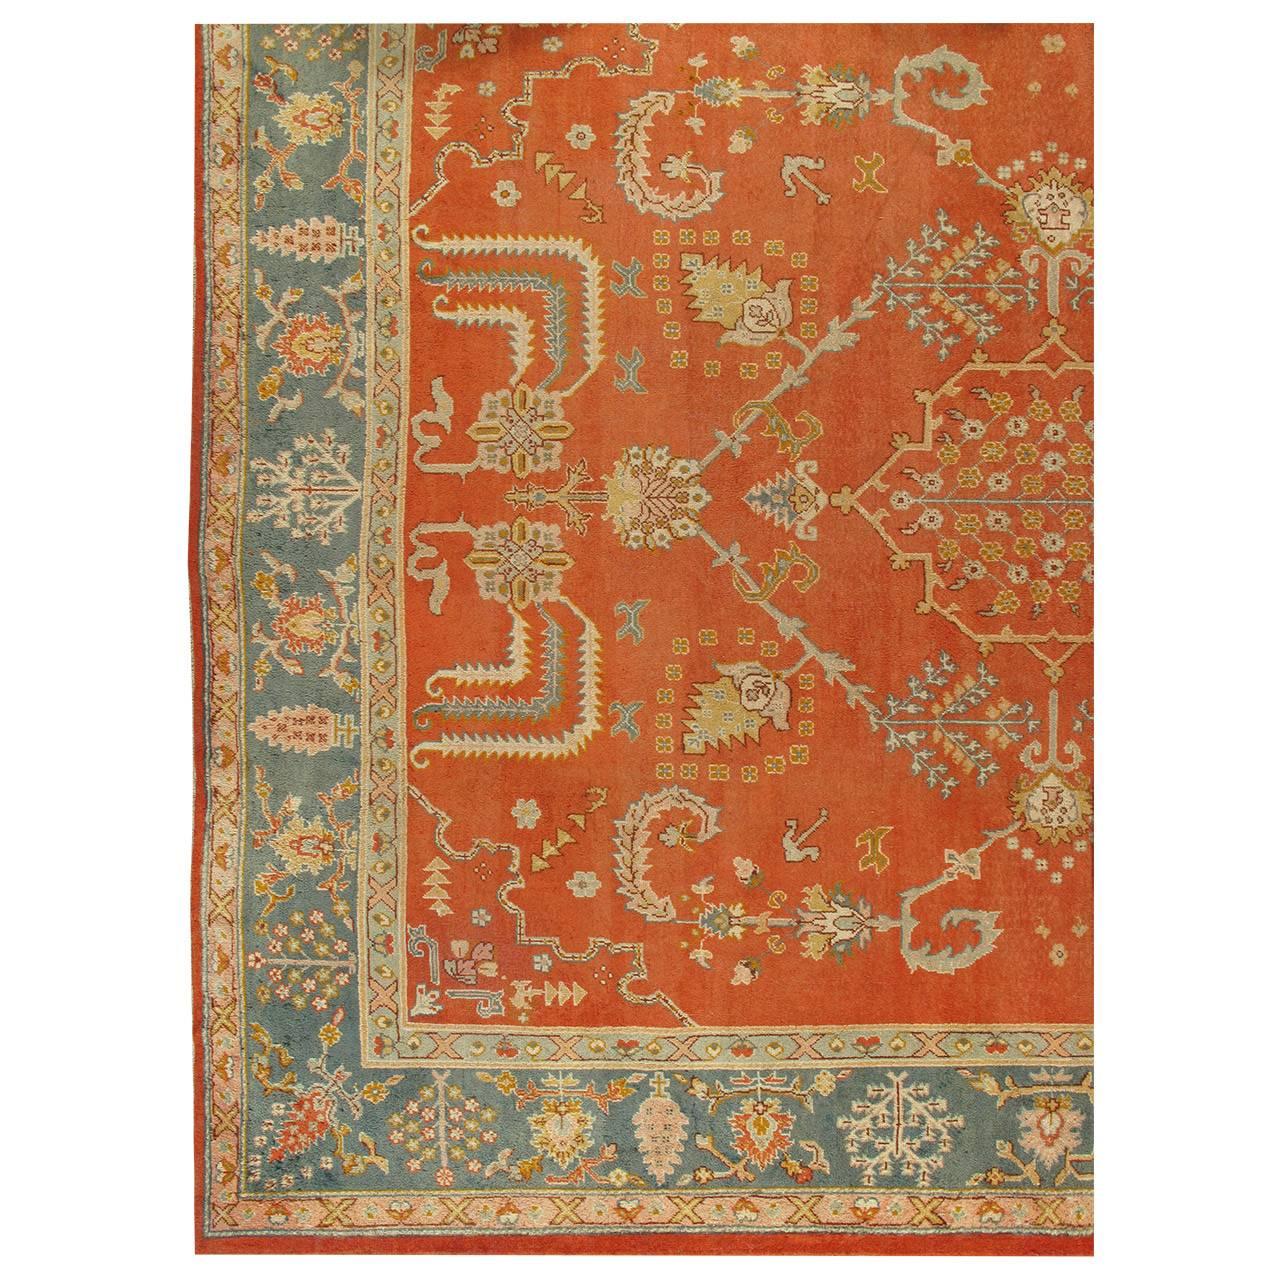 Antique Oushak Carpet, Handmade Oriental Rug, Coral Field, Blue Green Border 